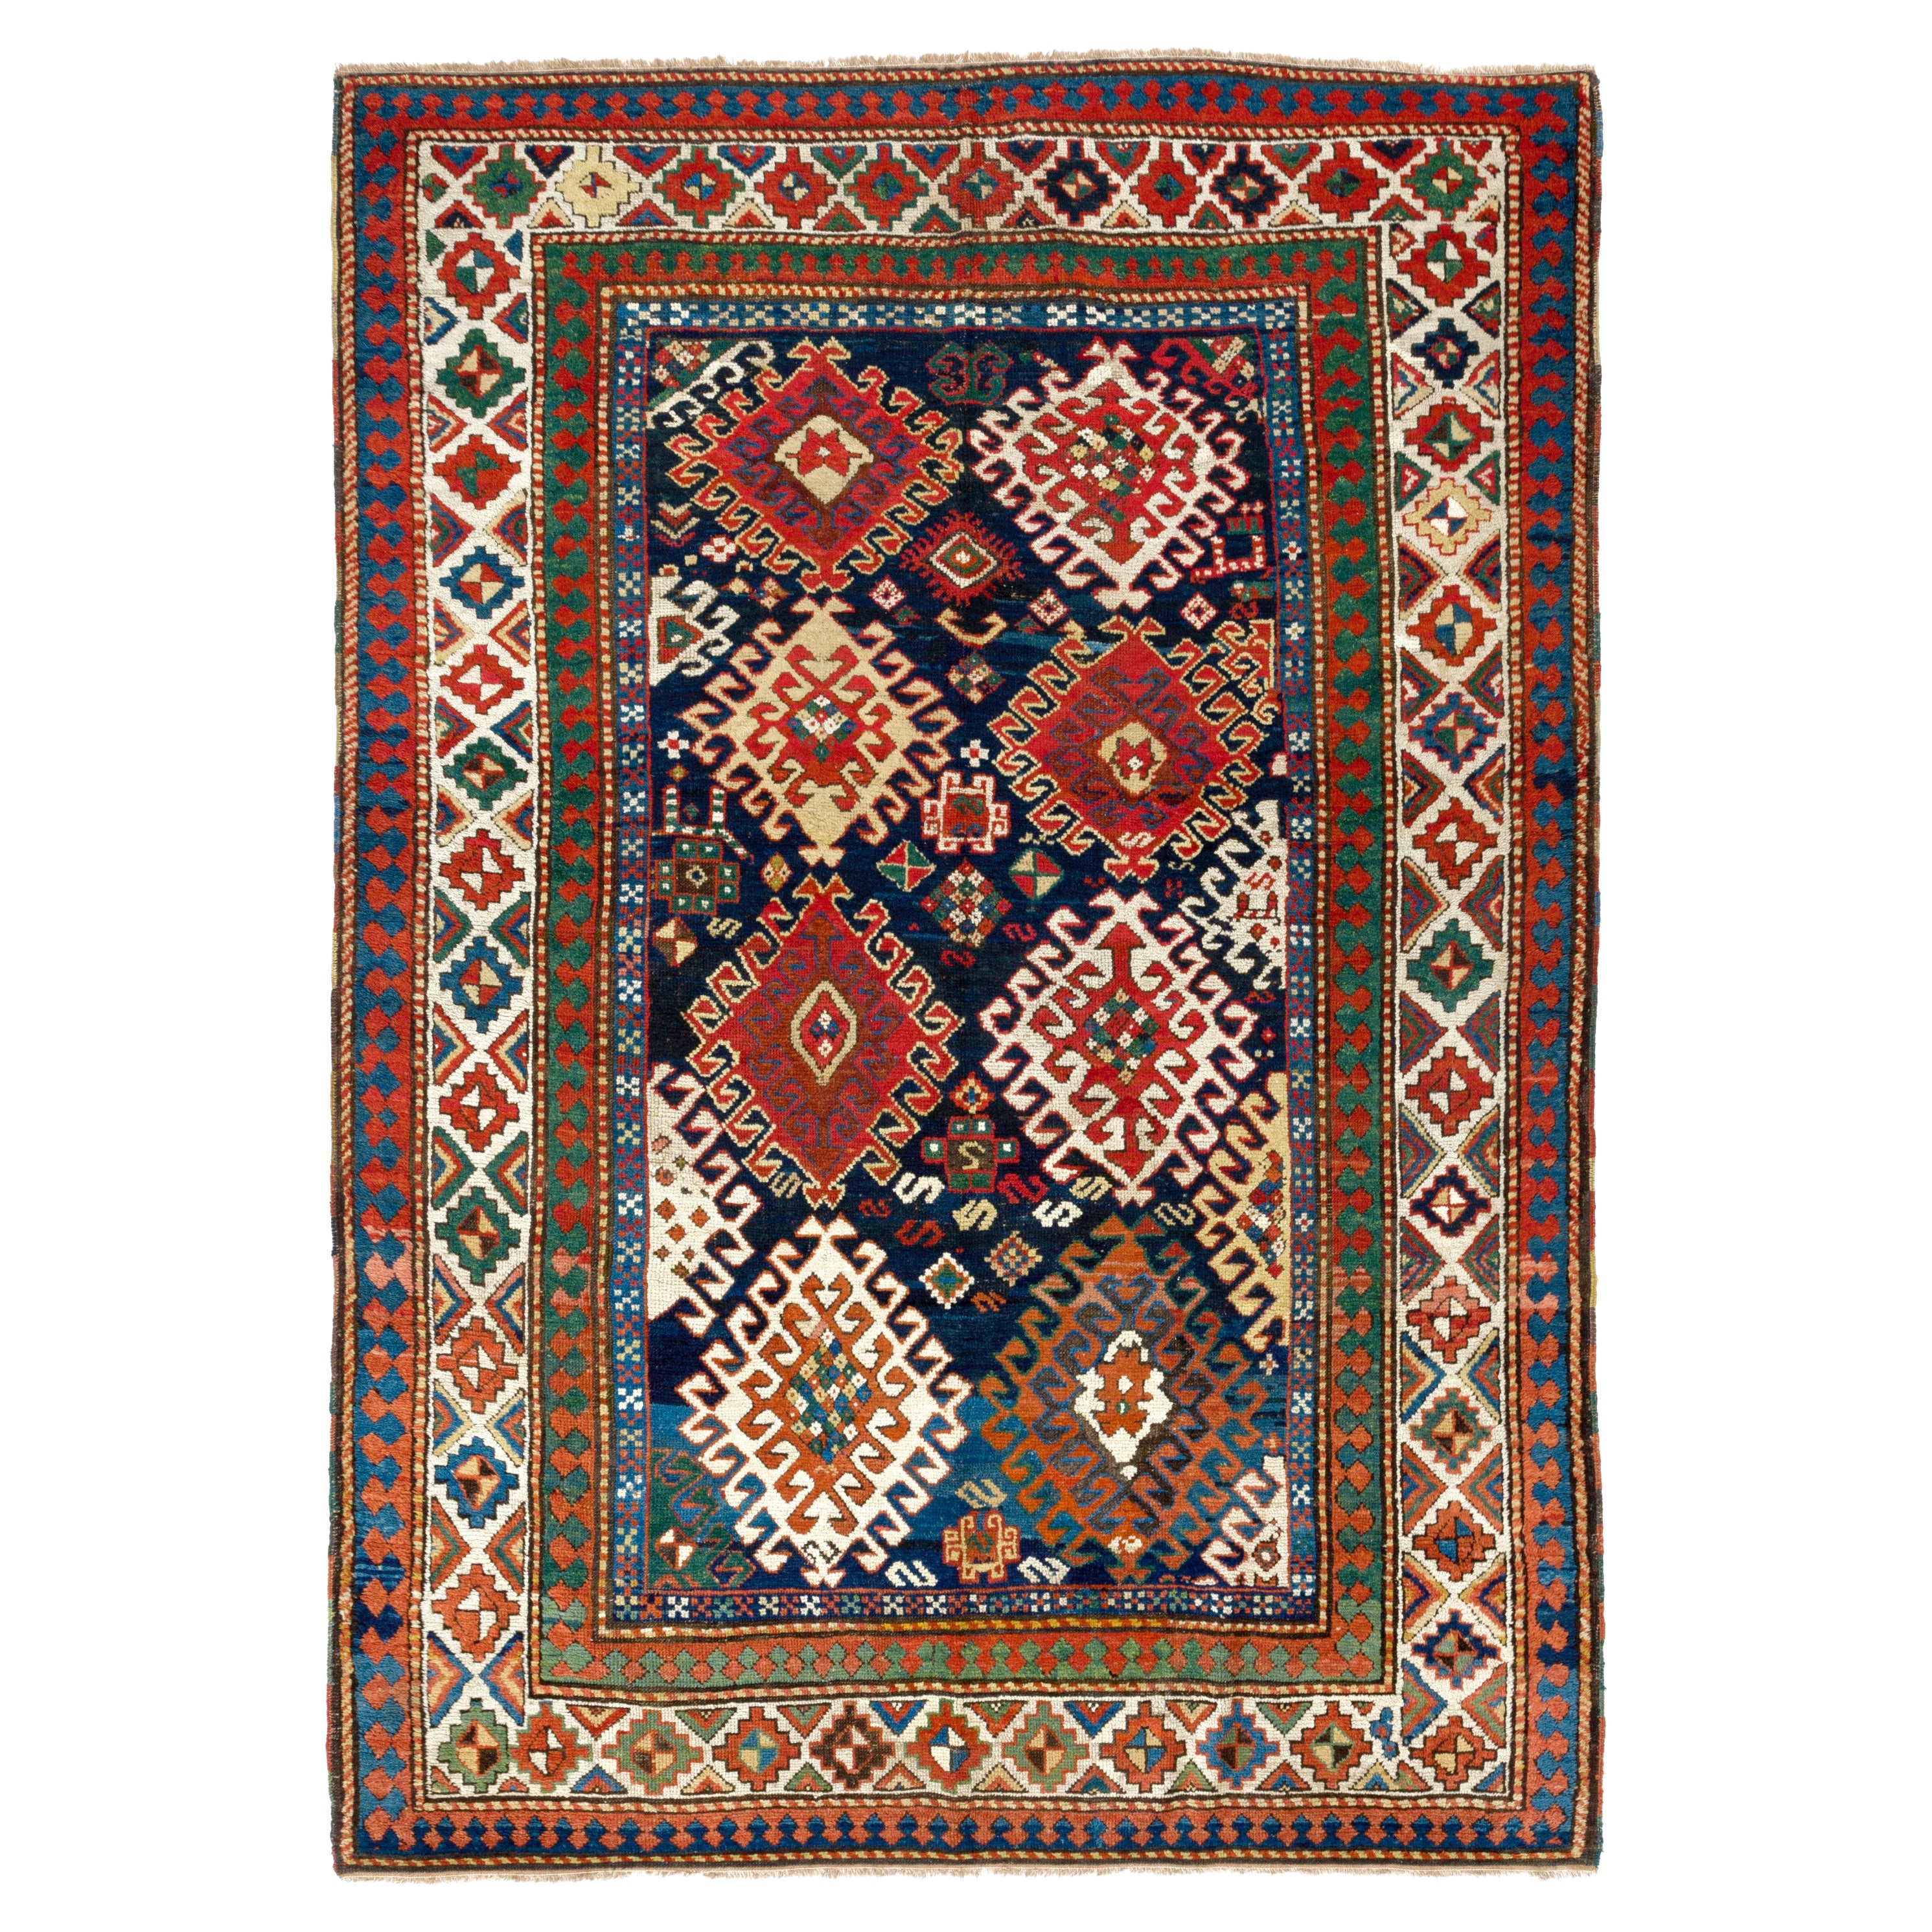 Antique Caucasian Bordjalou Kazak Rug, circa 1870